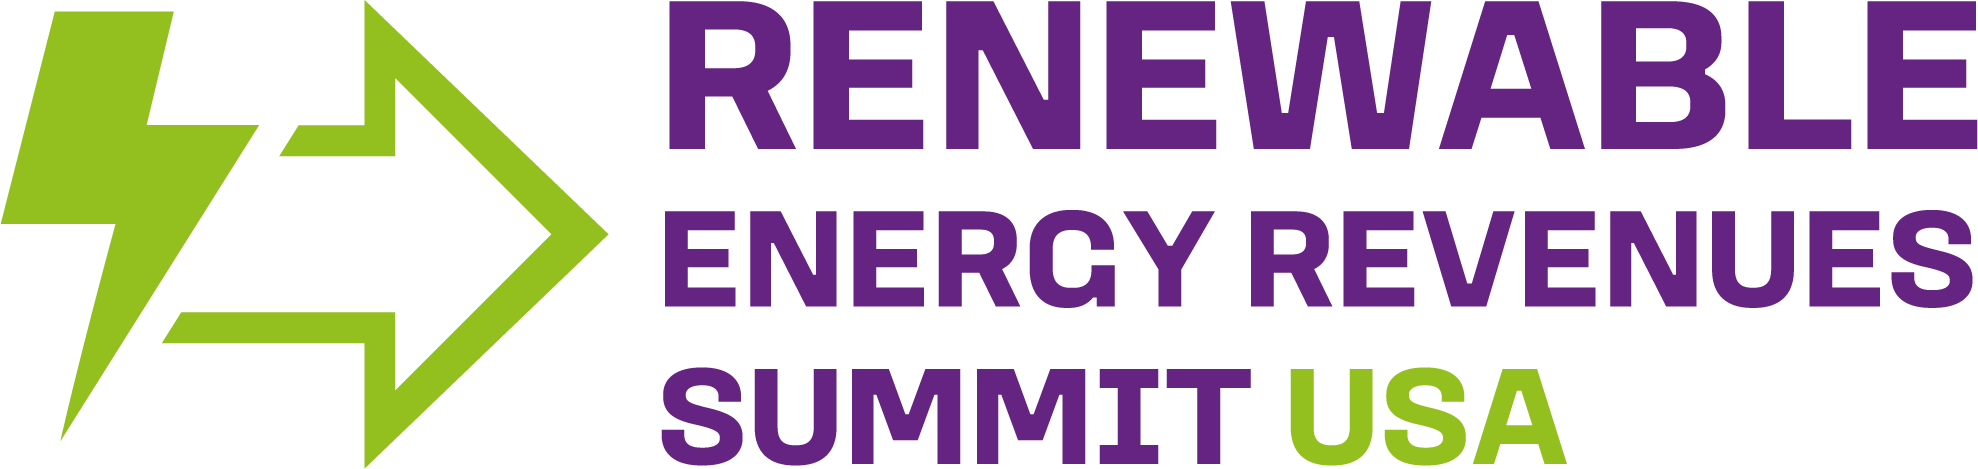 Renewable Energy Revenue Summit USA